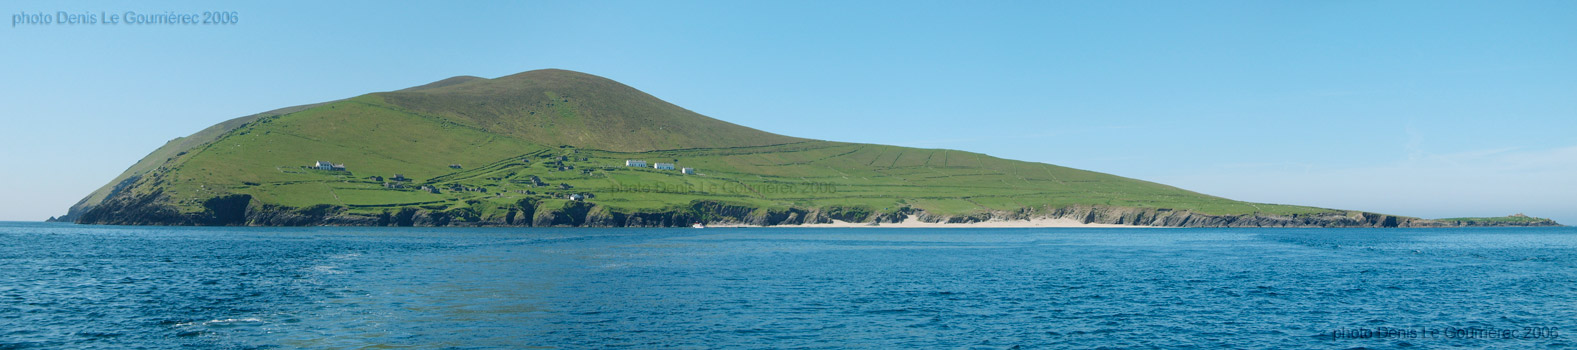 panorama blasket island kerry ireland